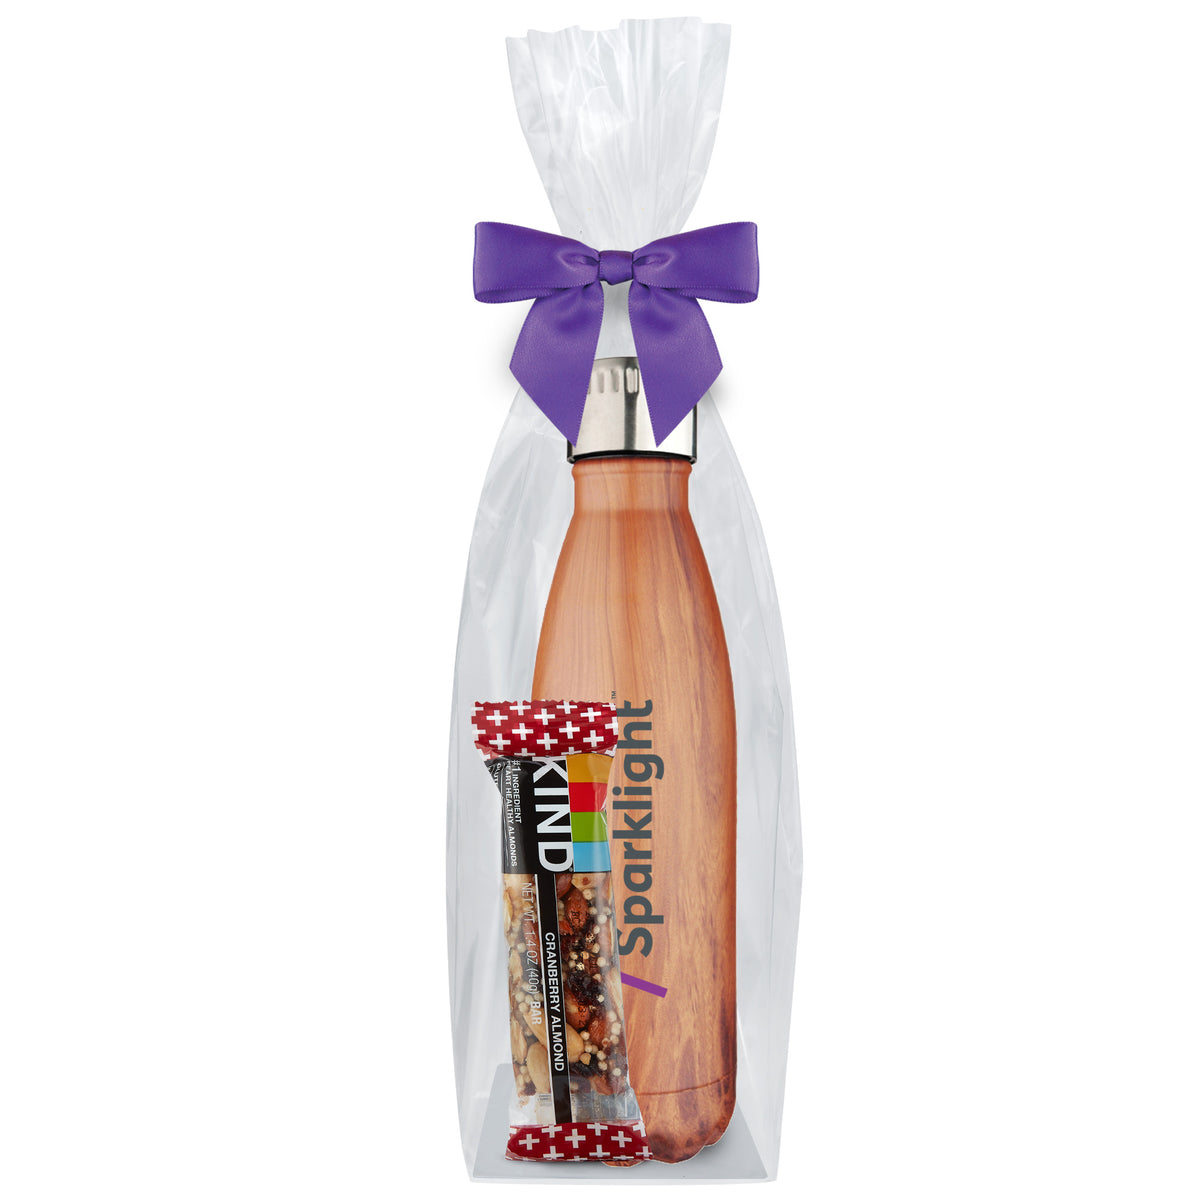 Water Bottle - 17 oz., Kind® Cranberry Almond Bar